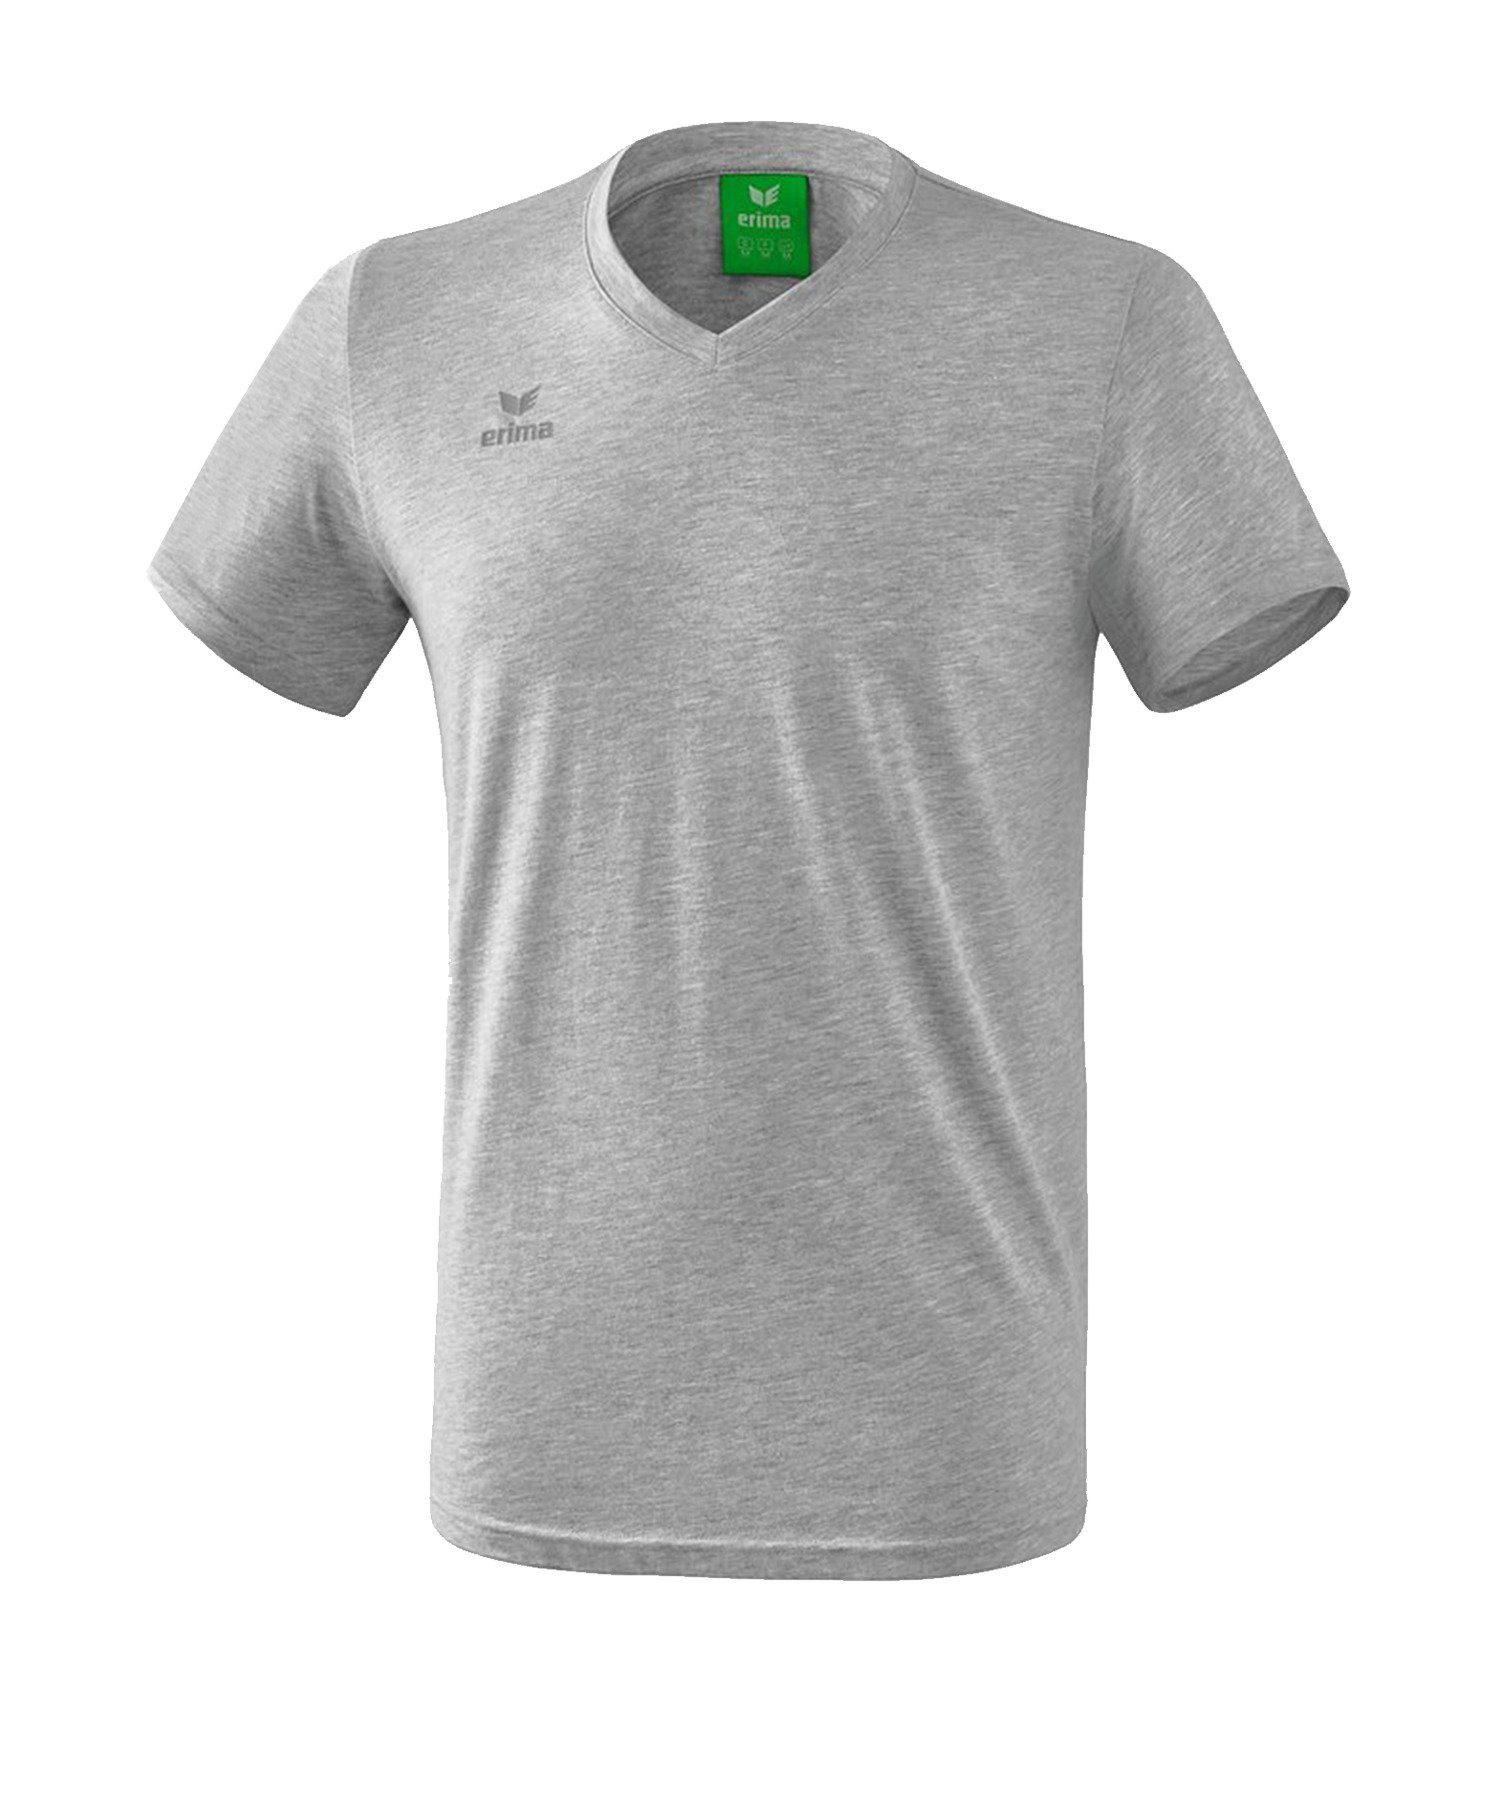 Erima T-Shirt Style T-Shirt default Grau